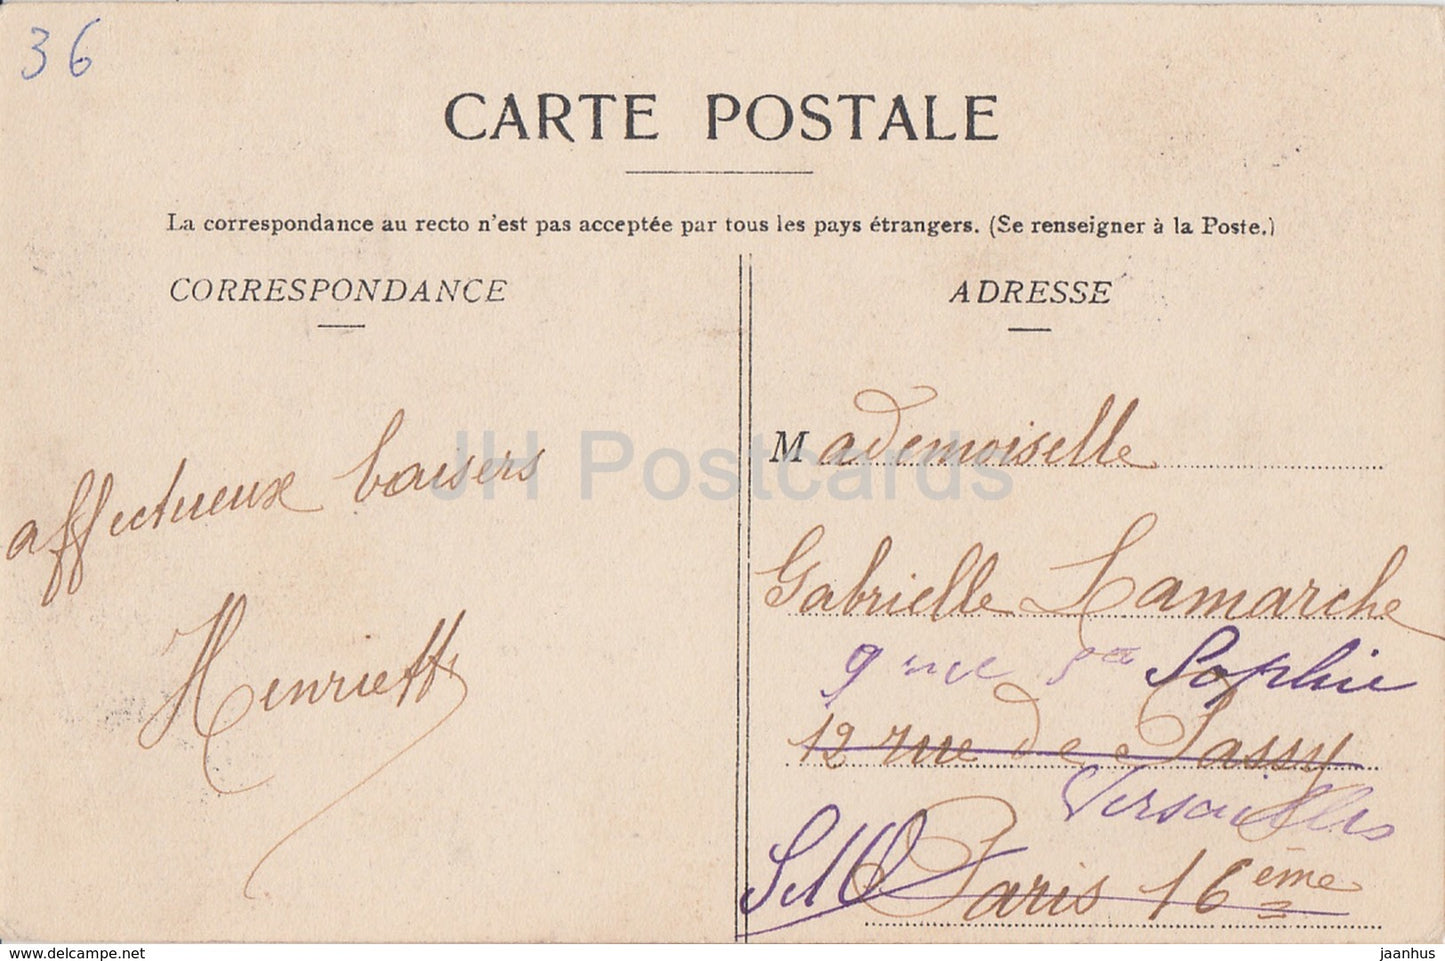 Moulins sur Cephons - Chateau du Pin - Schloss - alte Postkarte - 1905 - Frankreich - gebraucht